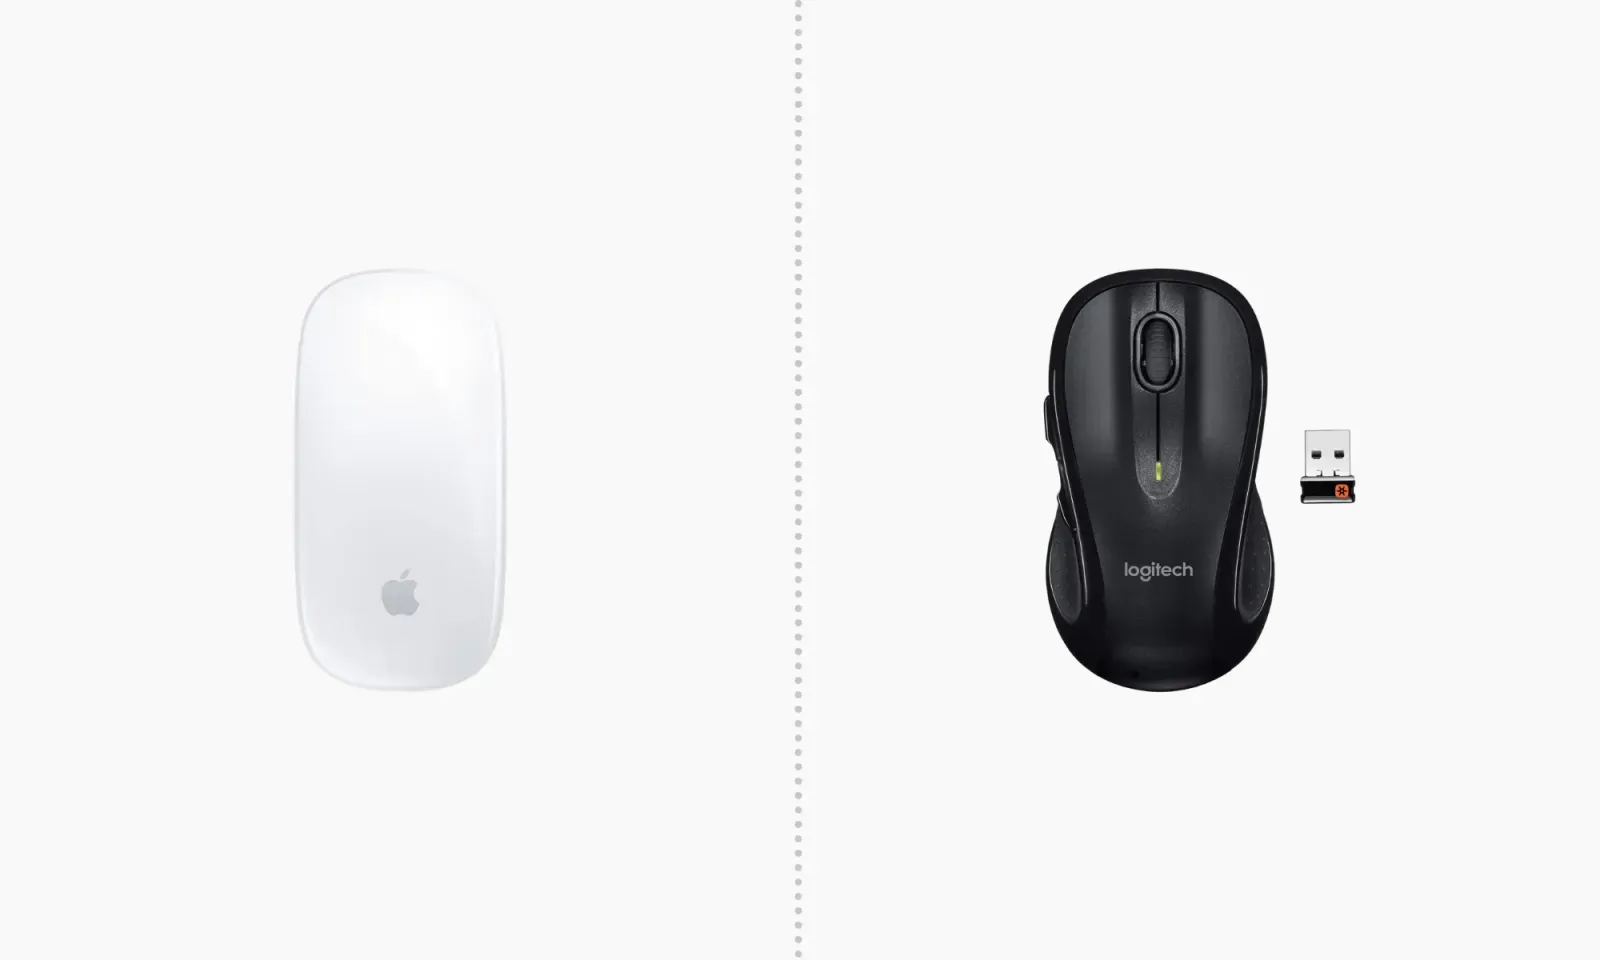 Il mouse Apple Magic Mouse a sinistra ed il mouse wireless Logitech M510 a destra